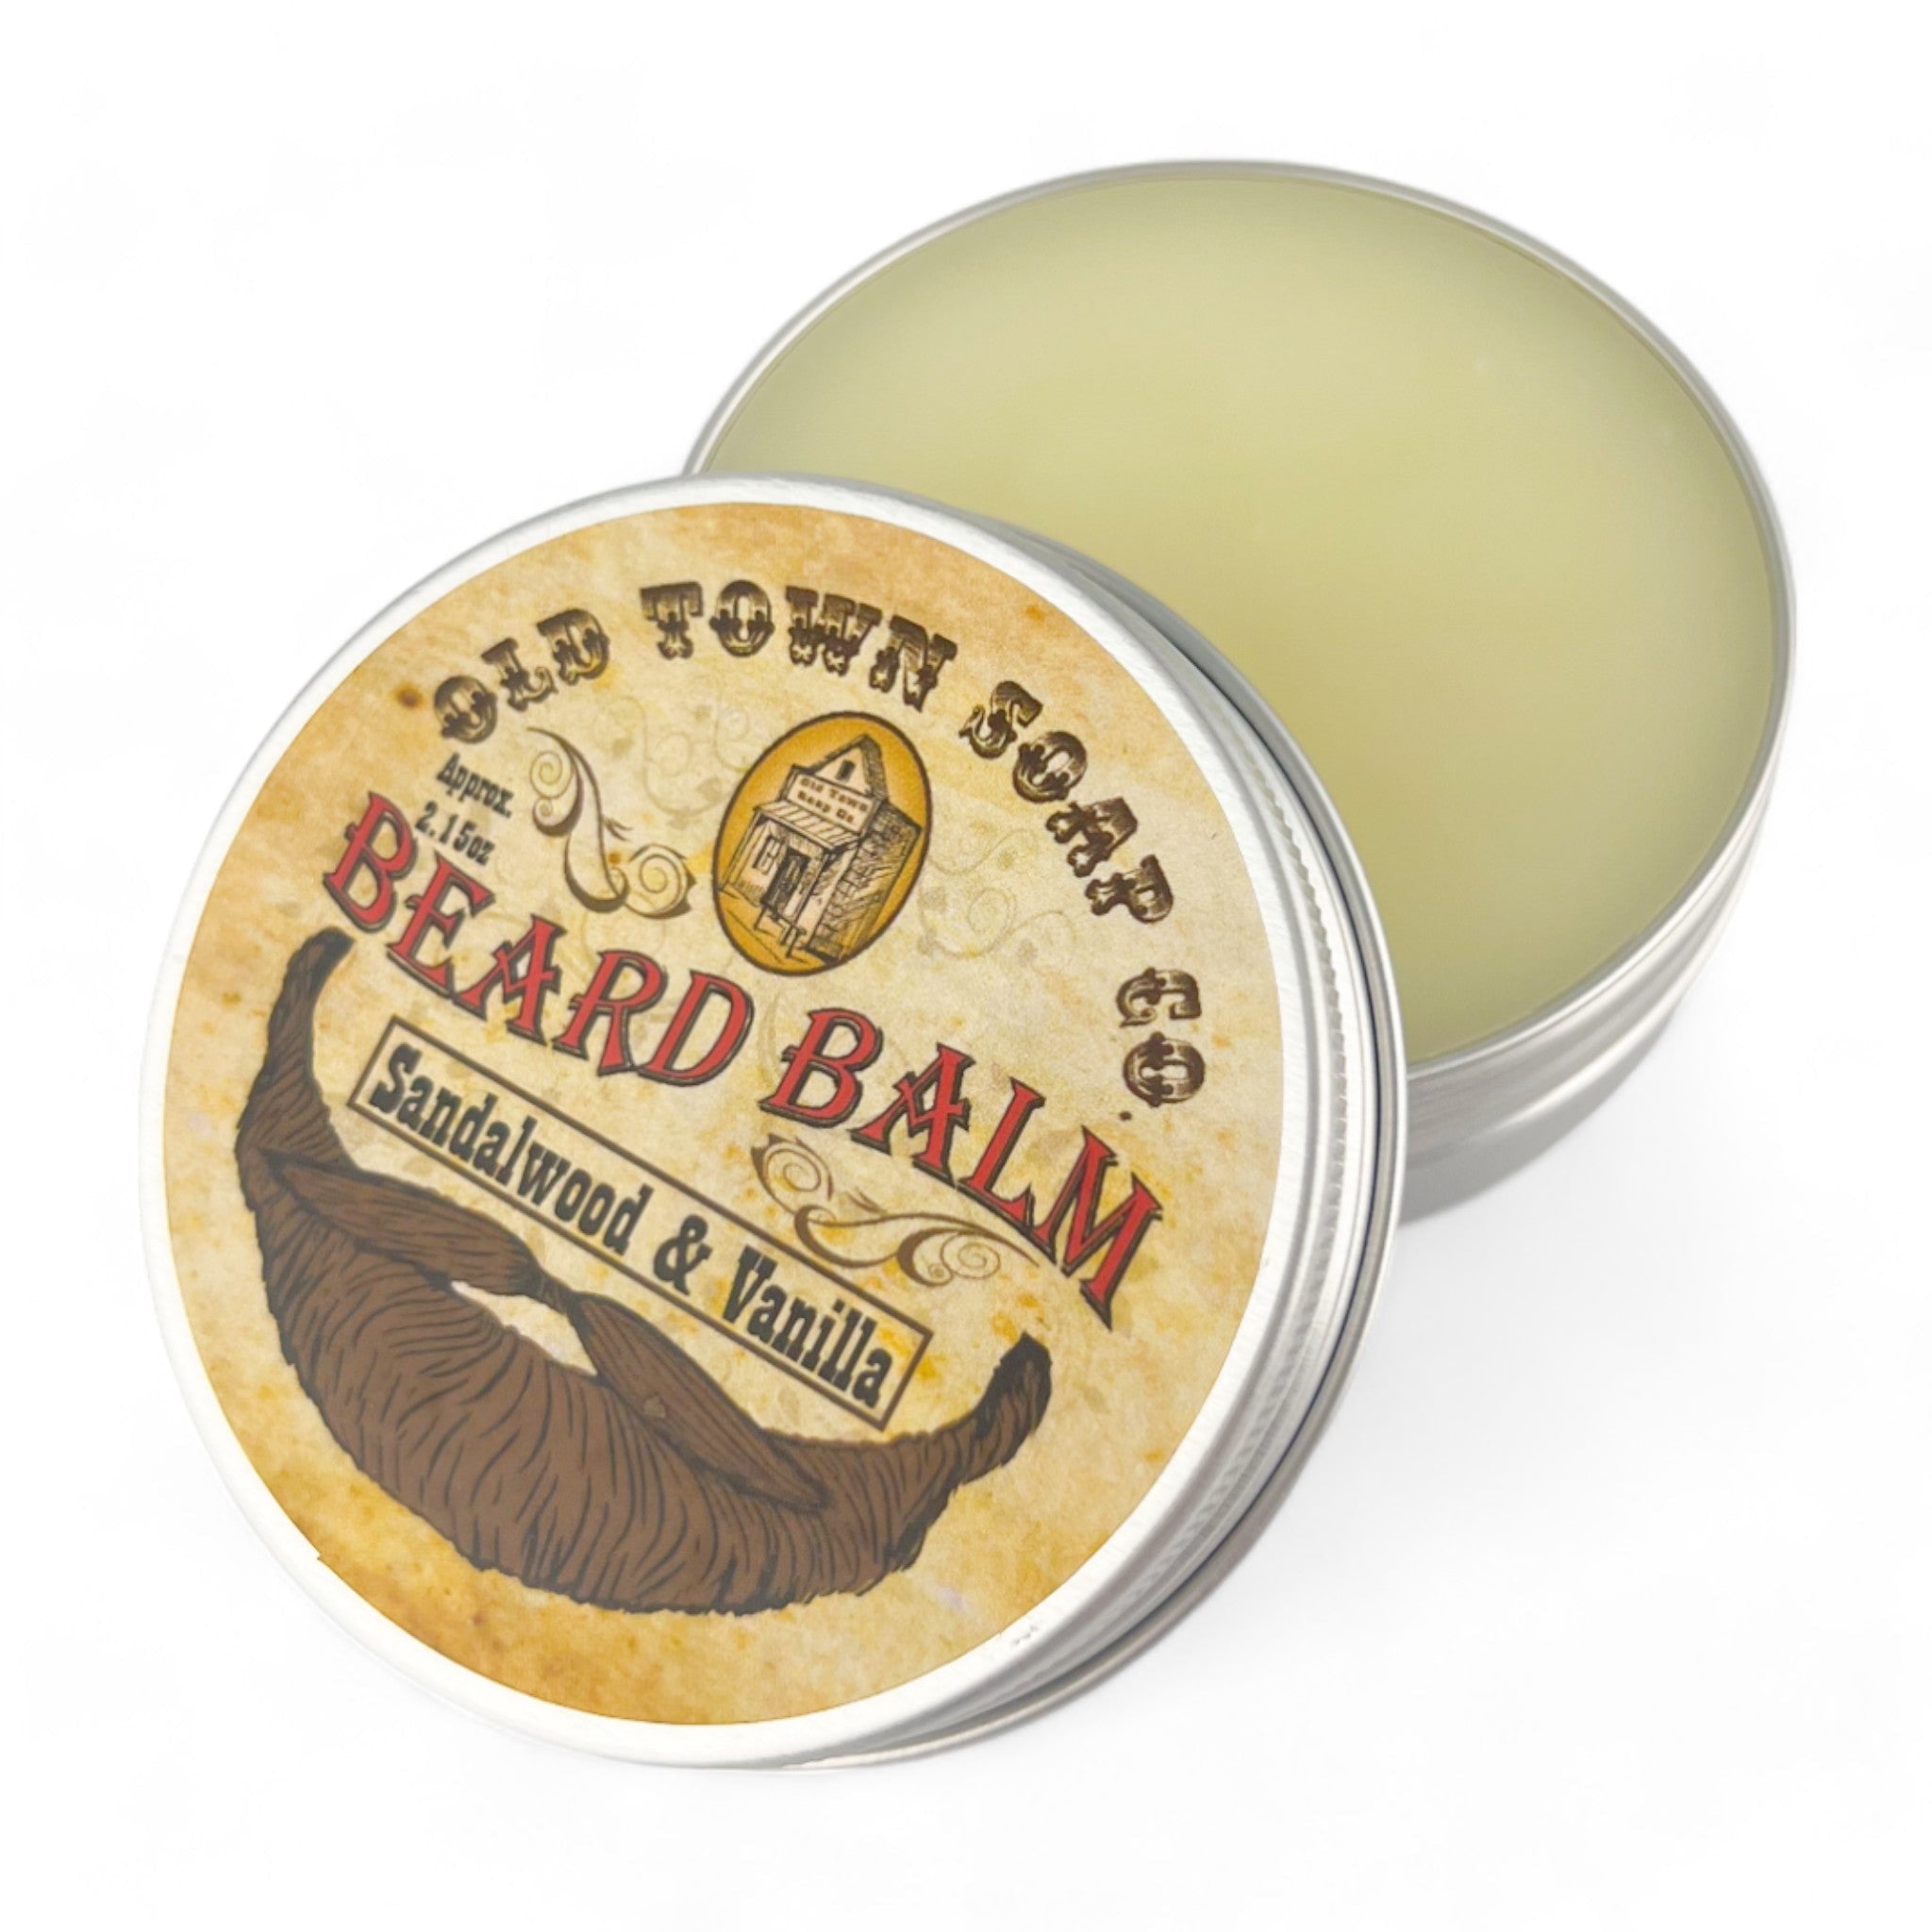 Sandalwood &amp; Vanilla Beard Balm - Old Town Soap Co.